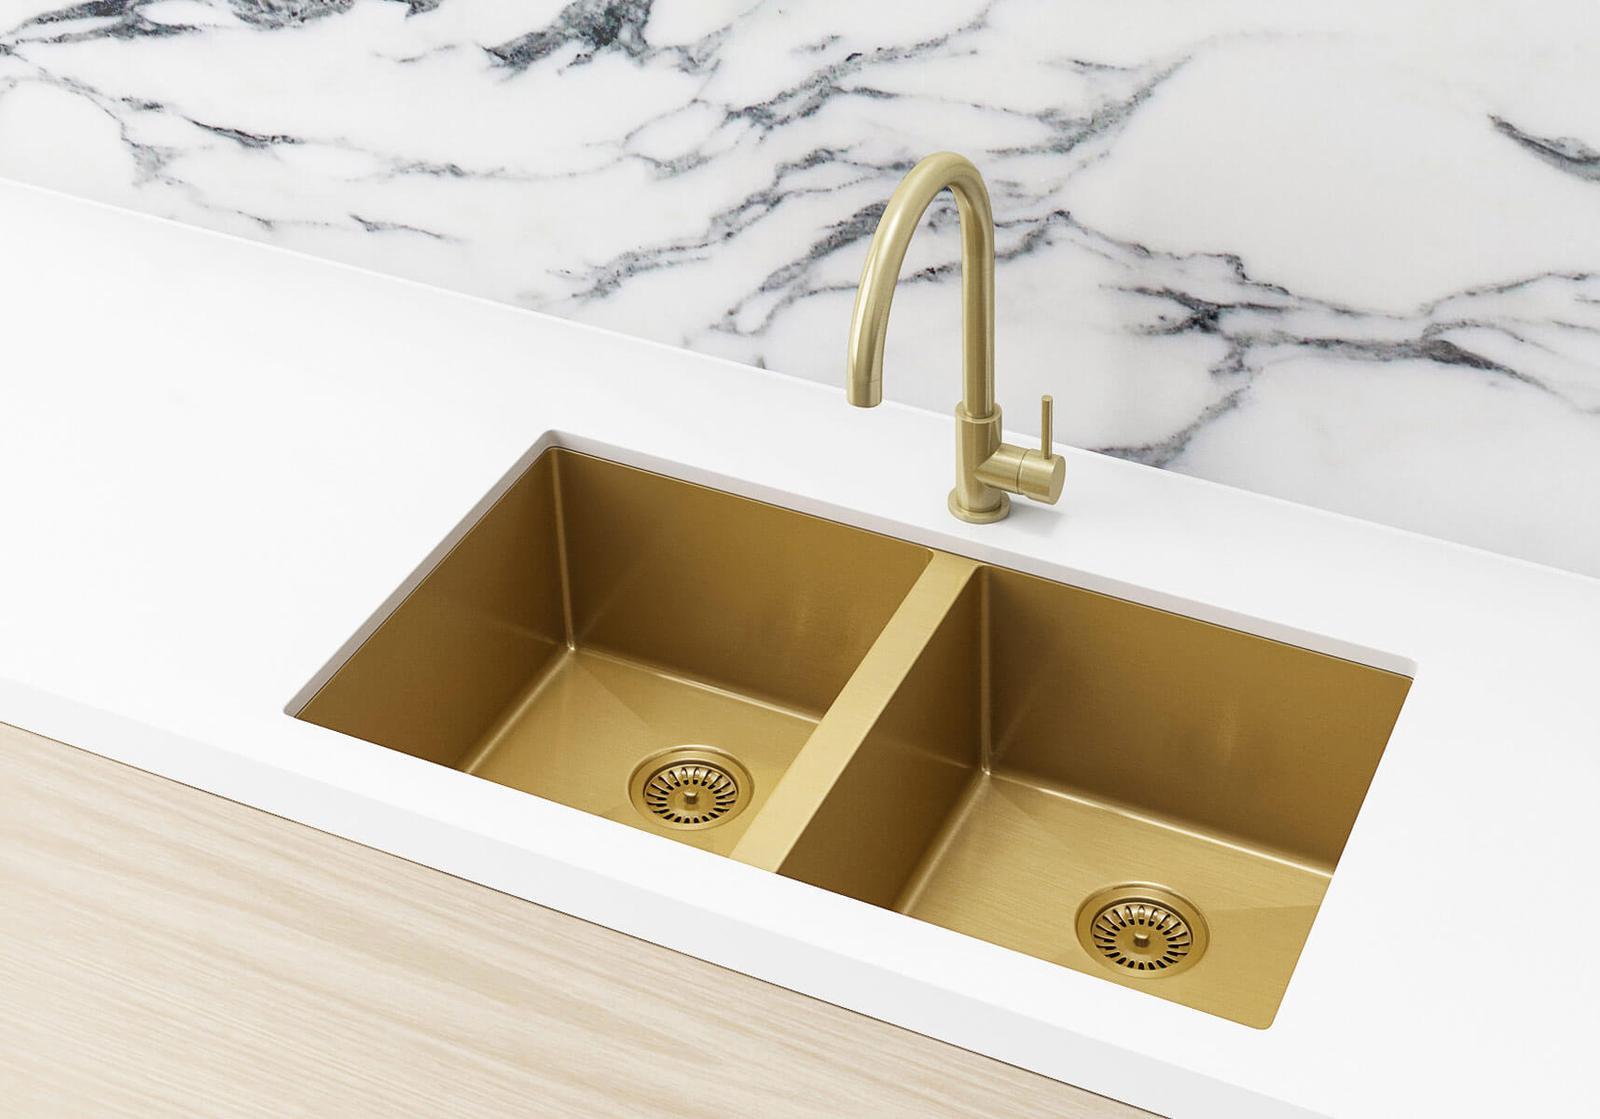 kitchen sink 3 bowl bronze color